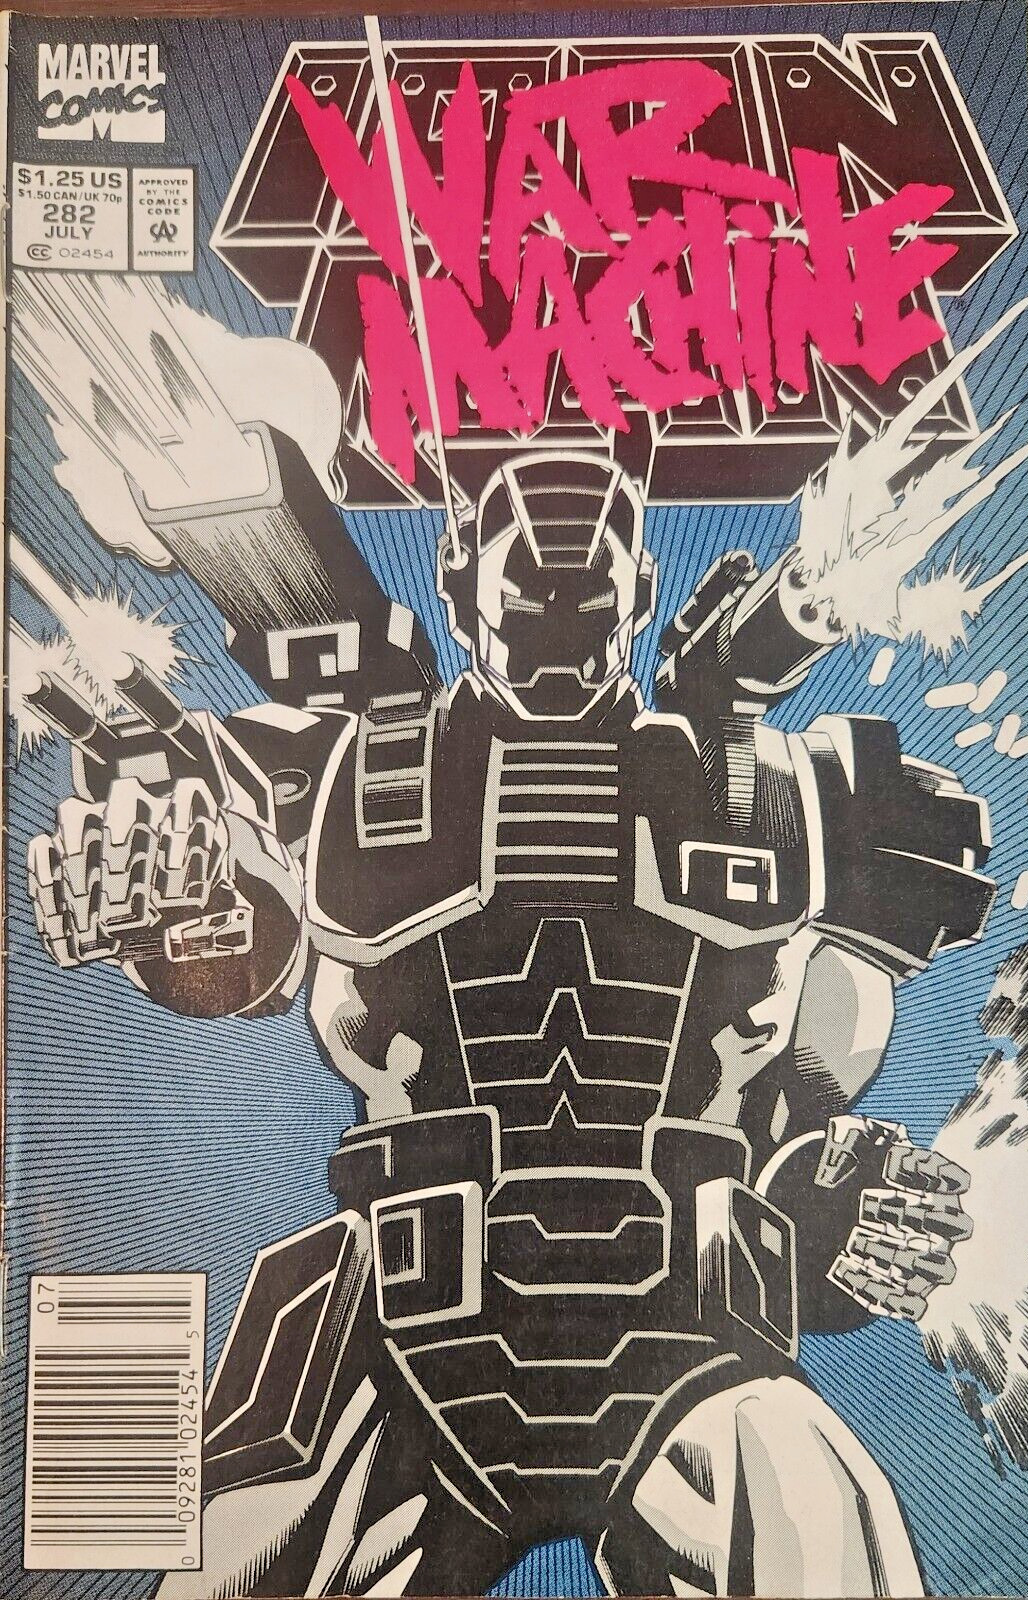 WAR MACHINE #282, 1st Full Appearance of War Machine 1992